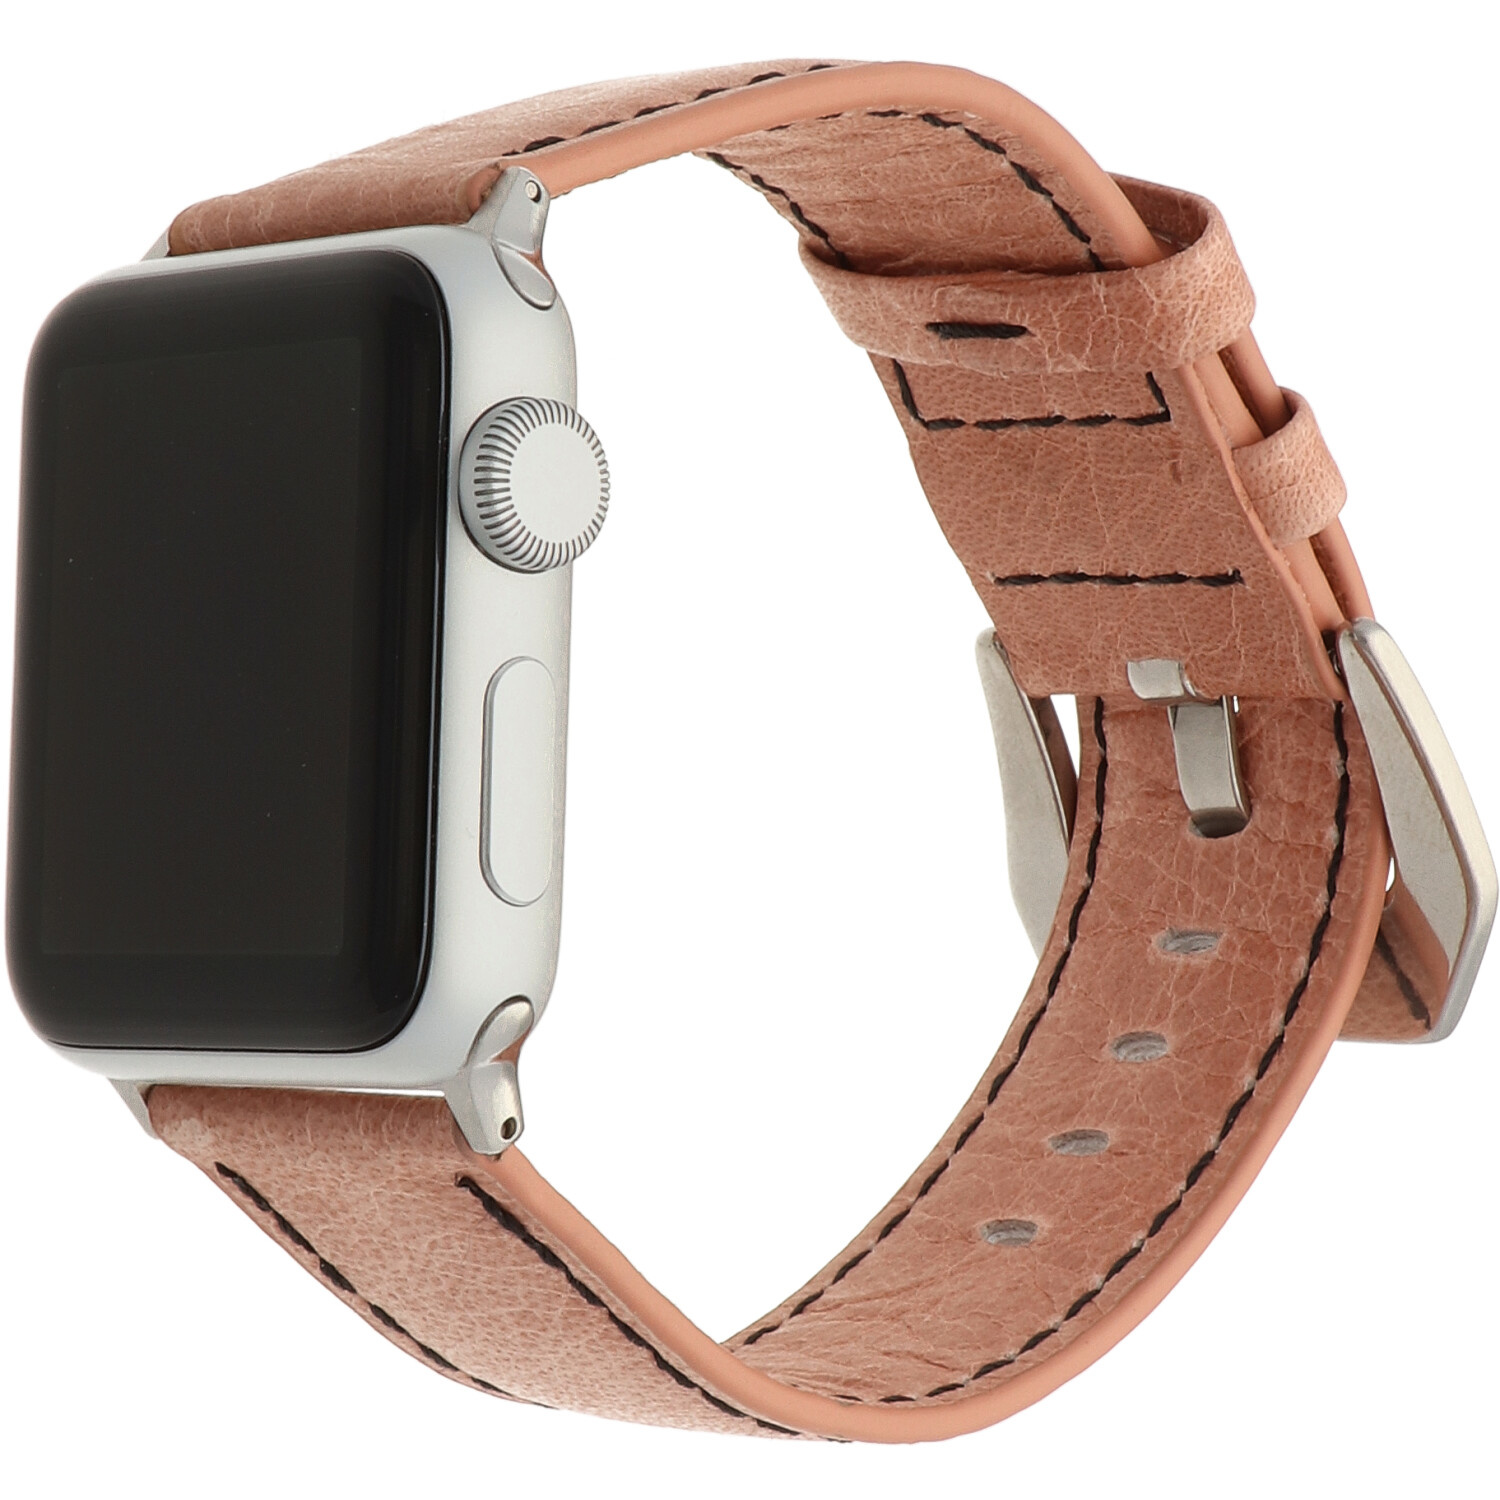 Apple Watch retro Lederarmband - beige